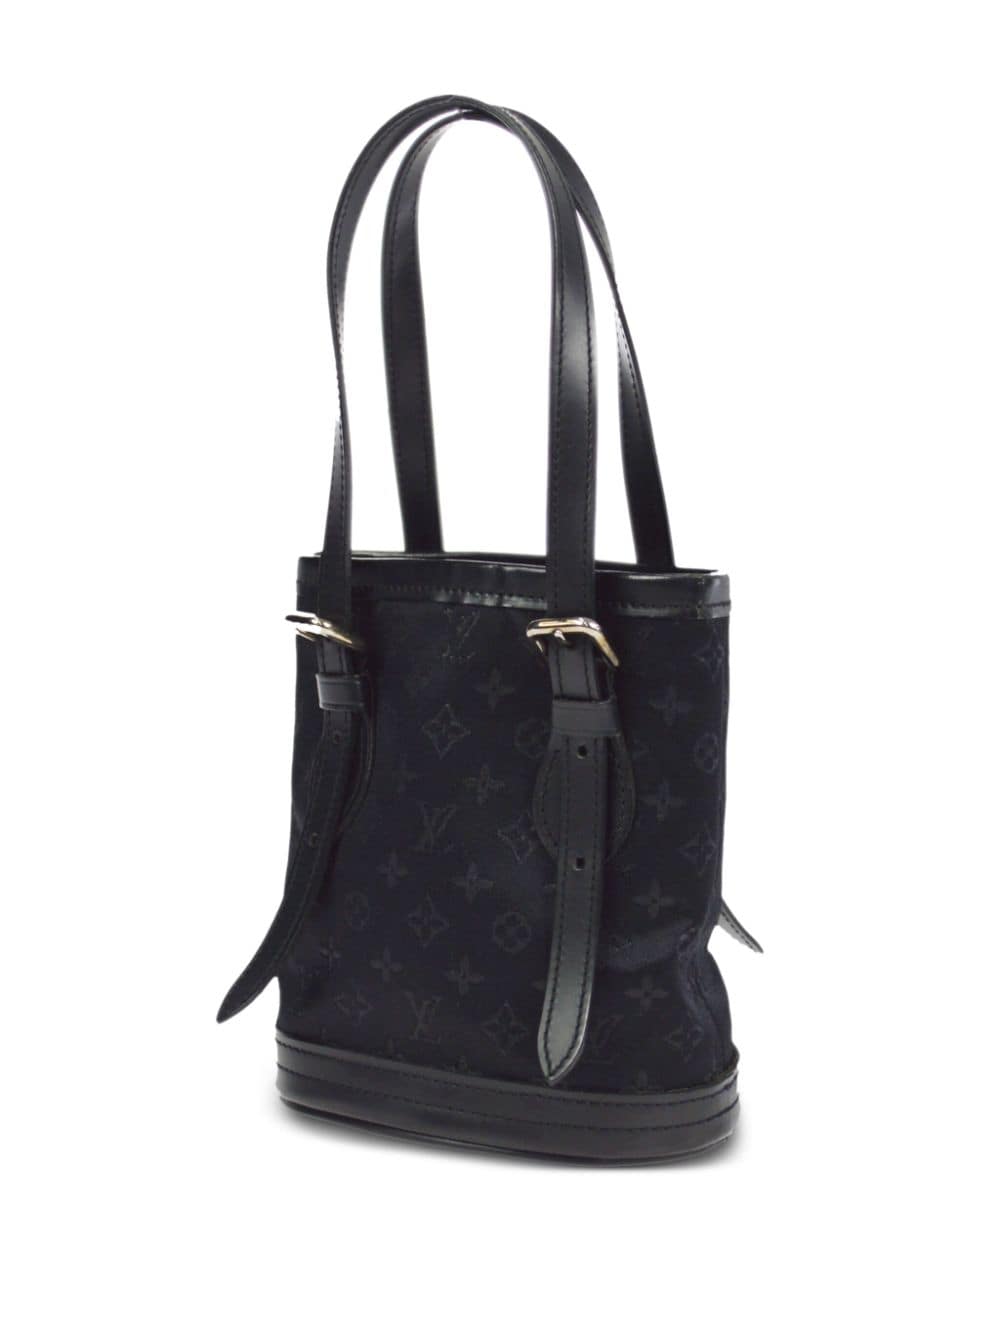 Louis Vuitton 2001 Little Bucket Bag - Farfetch